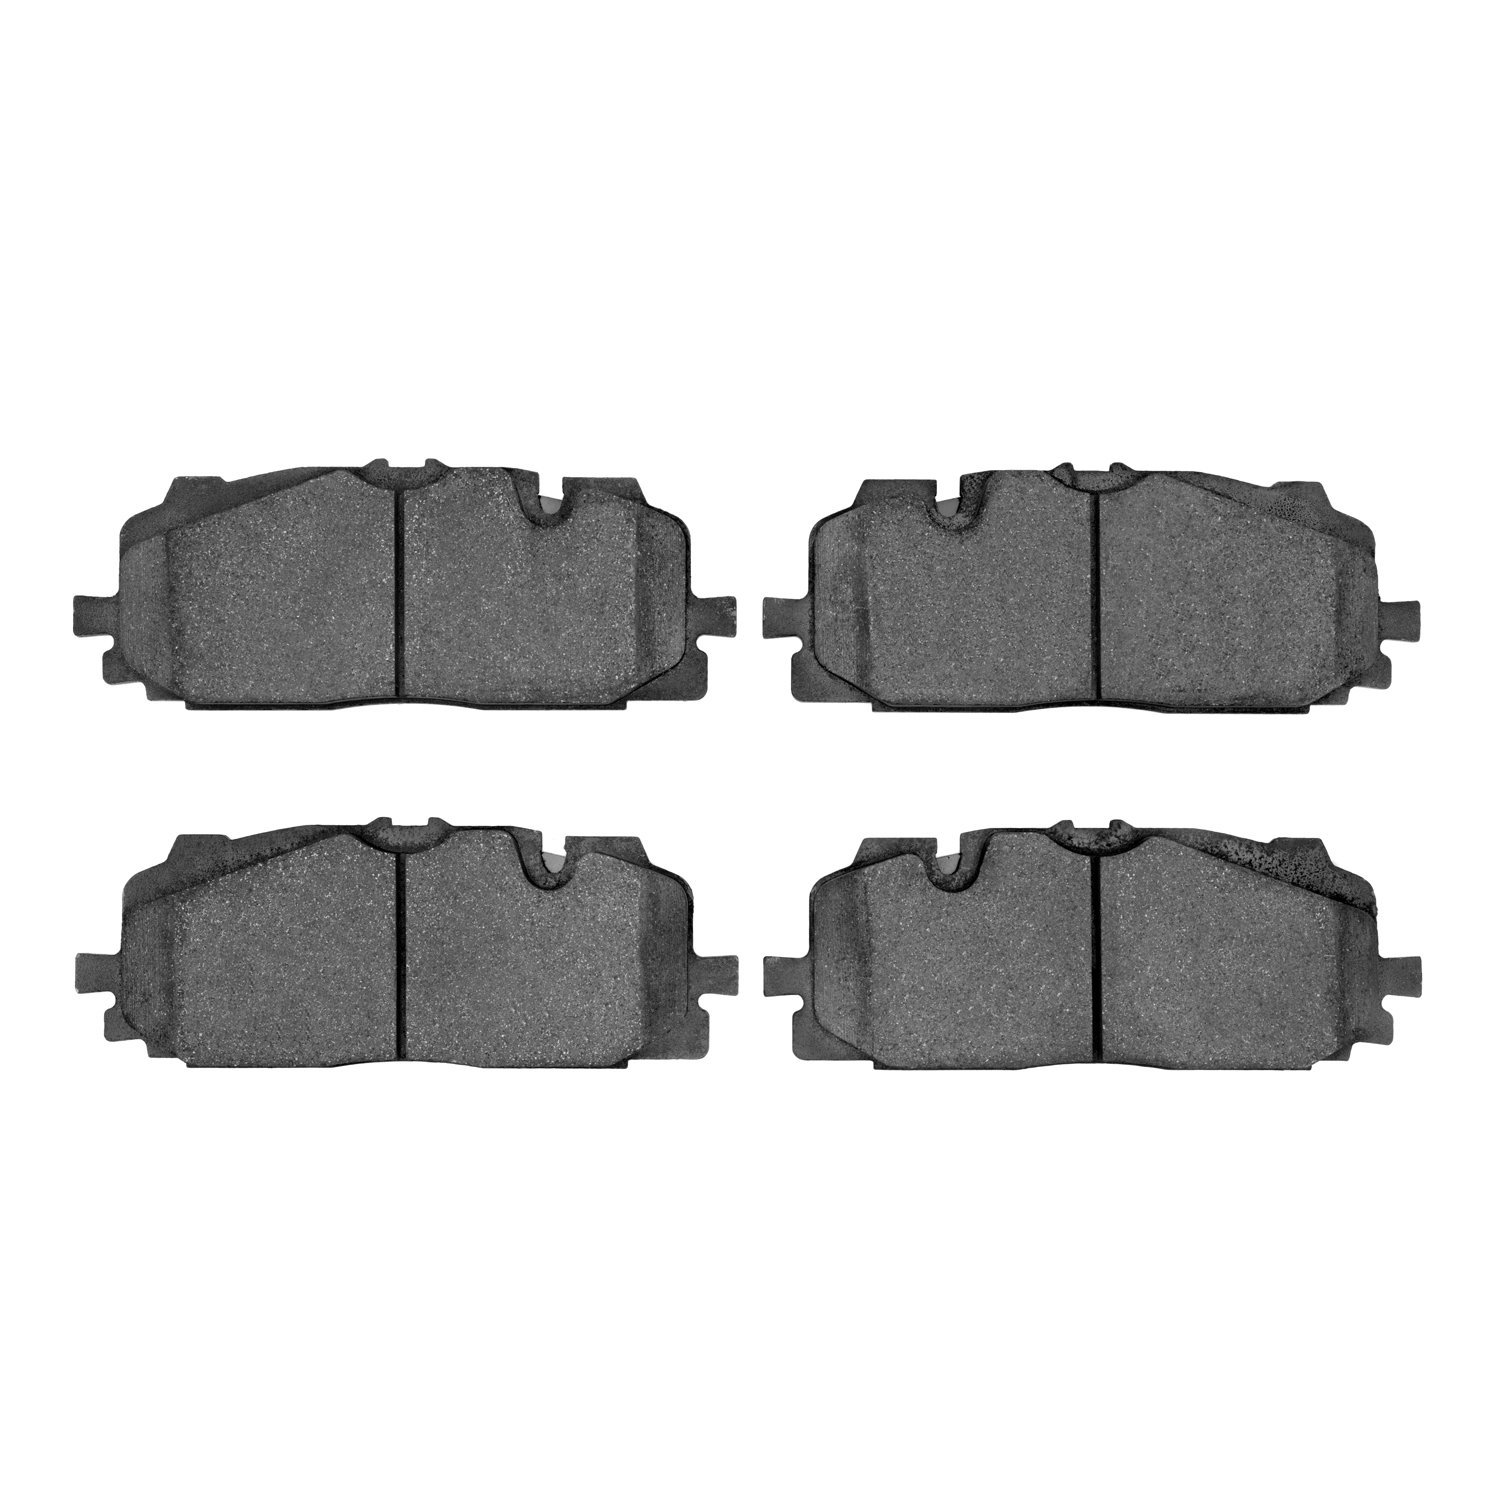 1000-1894-00 Track/Street Low-Metallic Brake Pads Kit, Fits Select Audi/Volkswagen, Position: Front